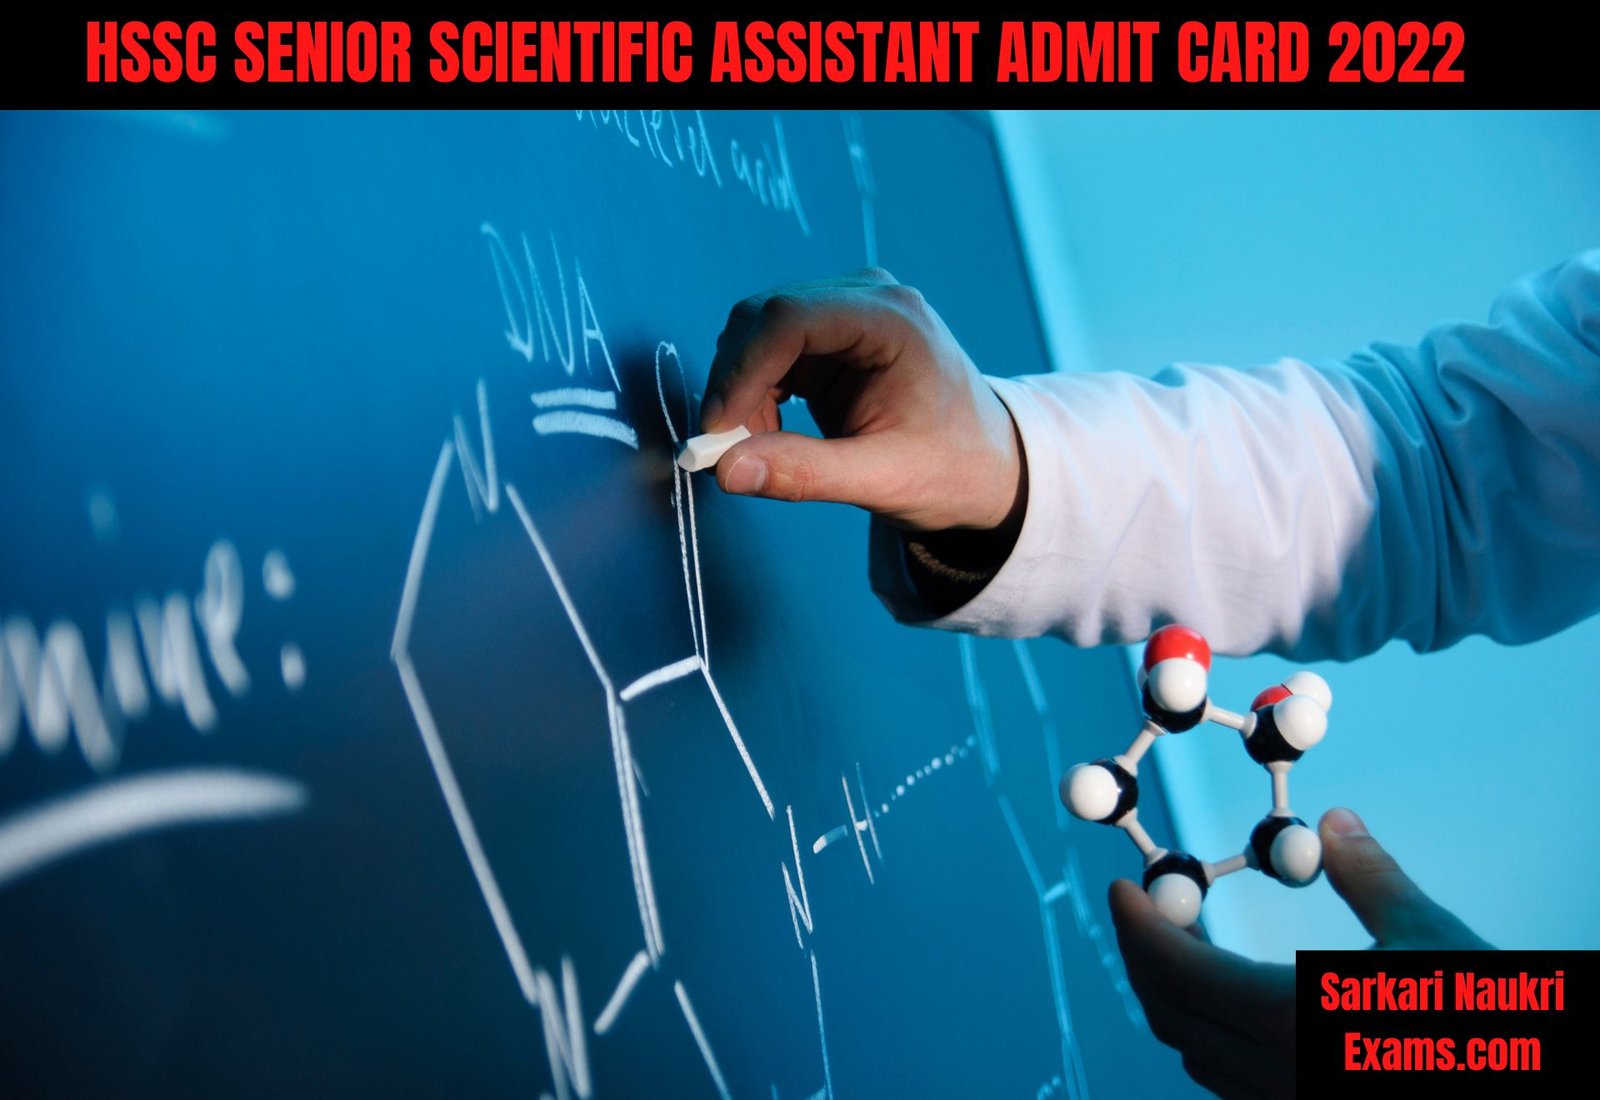 HSSC Senior Scientific Assistant Admit Card 2022 (OUT) | Exam Date, Download Link